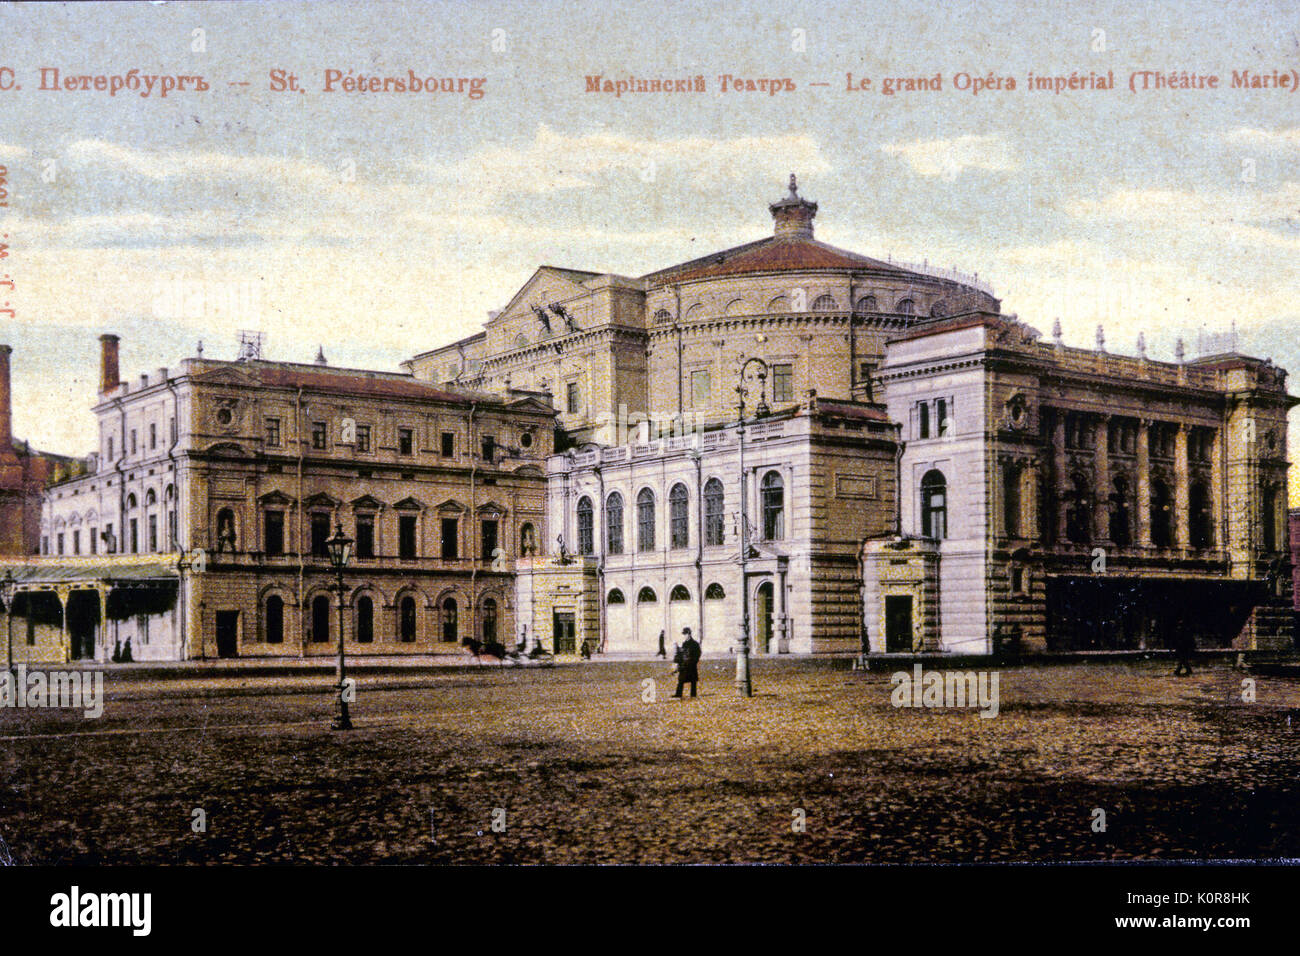 ST. PETERSBURG - Mariinsky-Orchester musizieren einen kraftvollen, Theater (Le Grand Opera Imperial) - Späten 19./frühen 20 centurypostcard Stockfoto